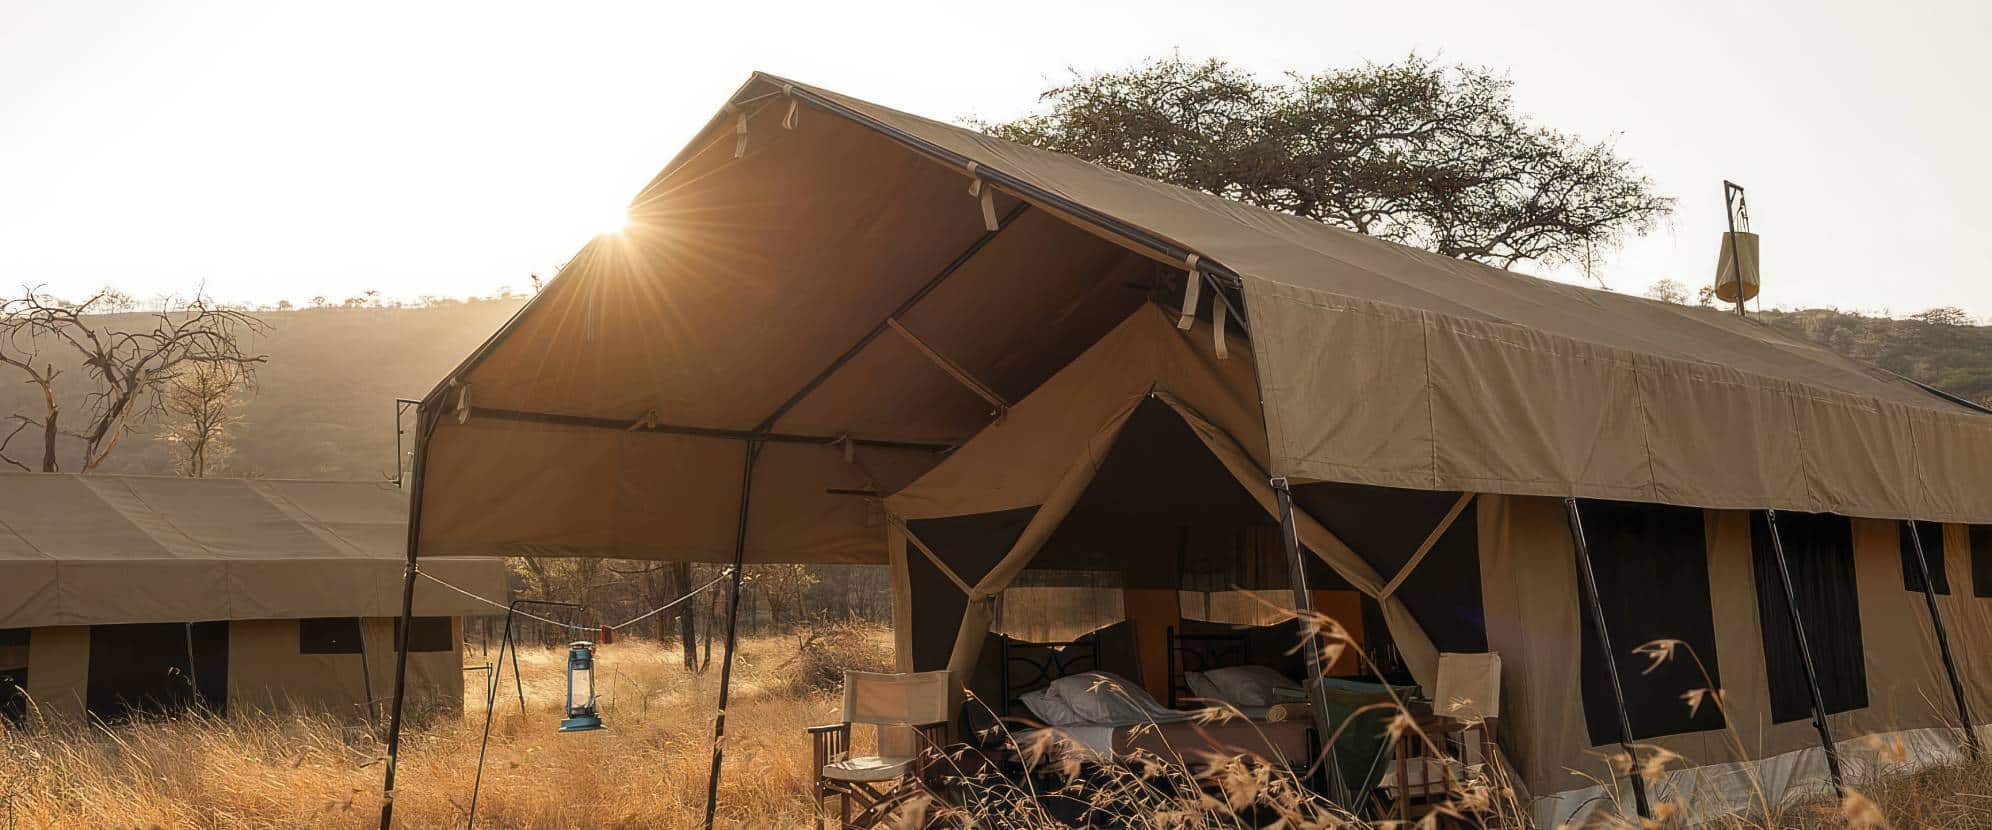 <a href="https://www. Easytravel. Co. Tz/accommodation/ndutu-kati-kati-tented-camp/">ndutu kati kati campamento de tiendas de campaña</a>